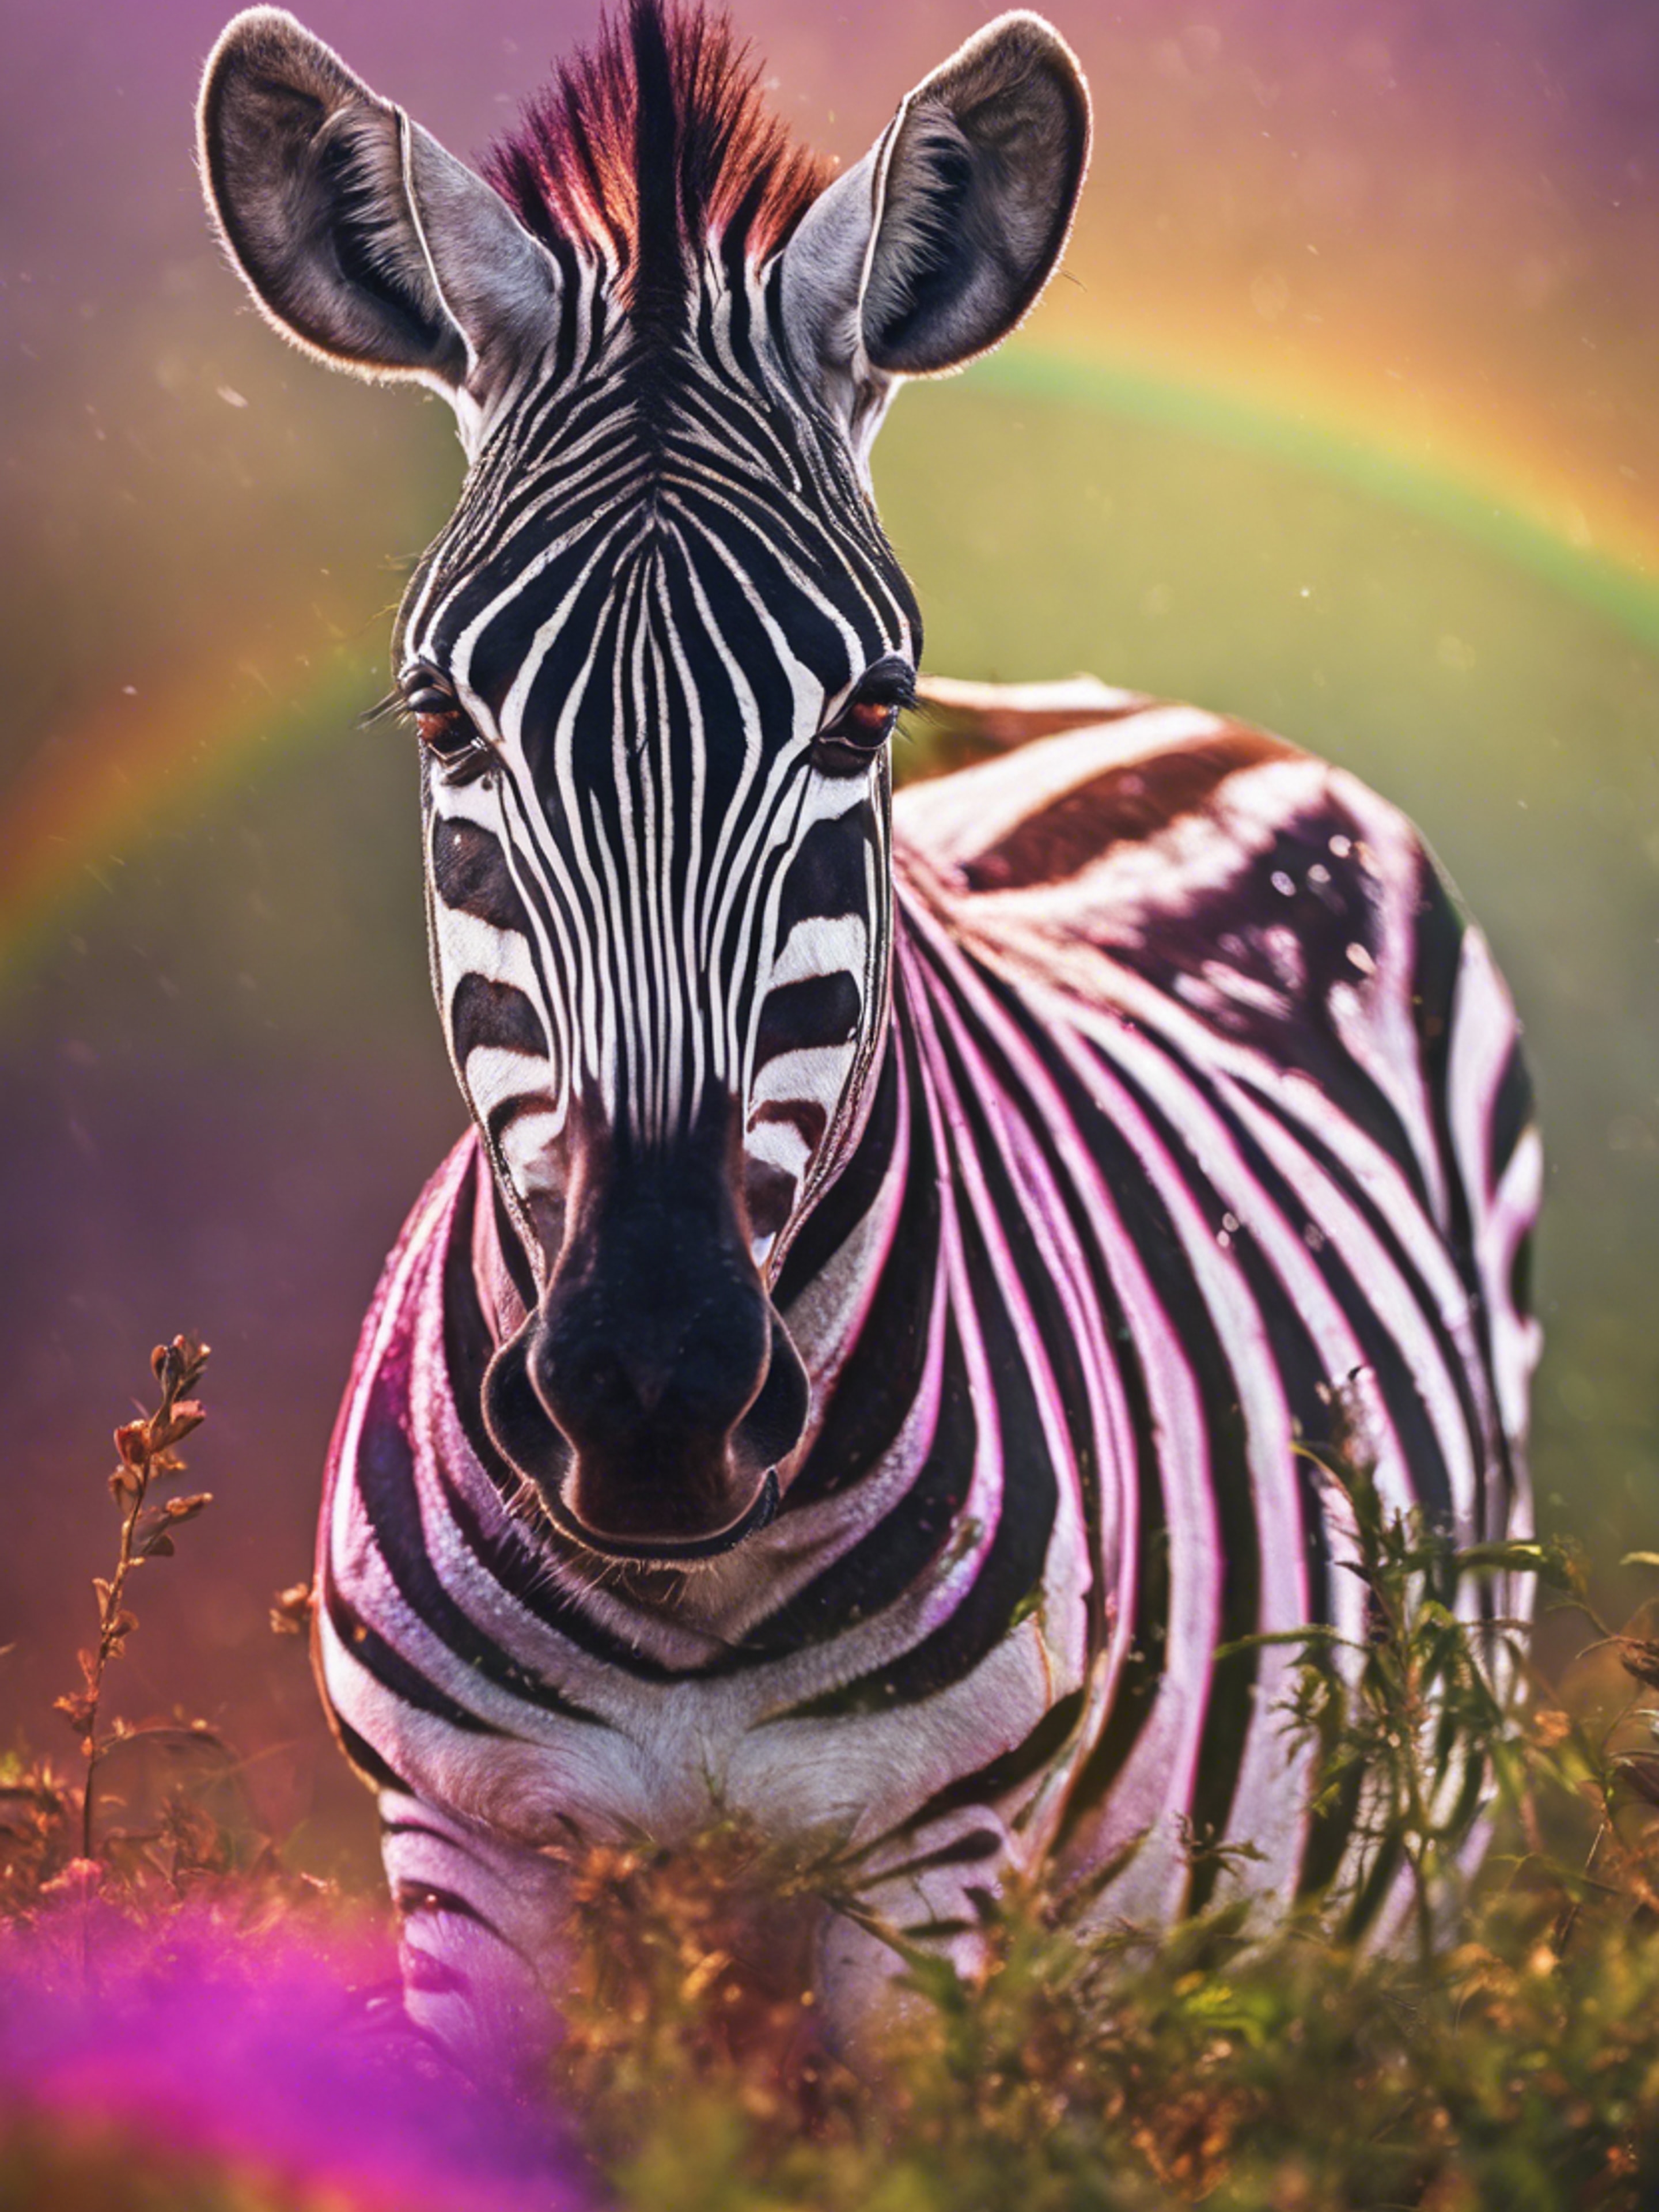 A zebra in the African wild under a vibrant rainbow after a short rain shower. Wallpaper[a984eacdffd5482bb541]